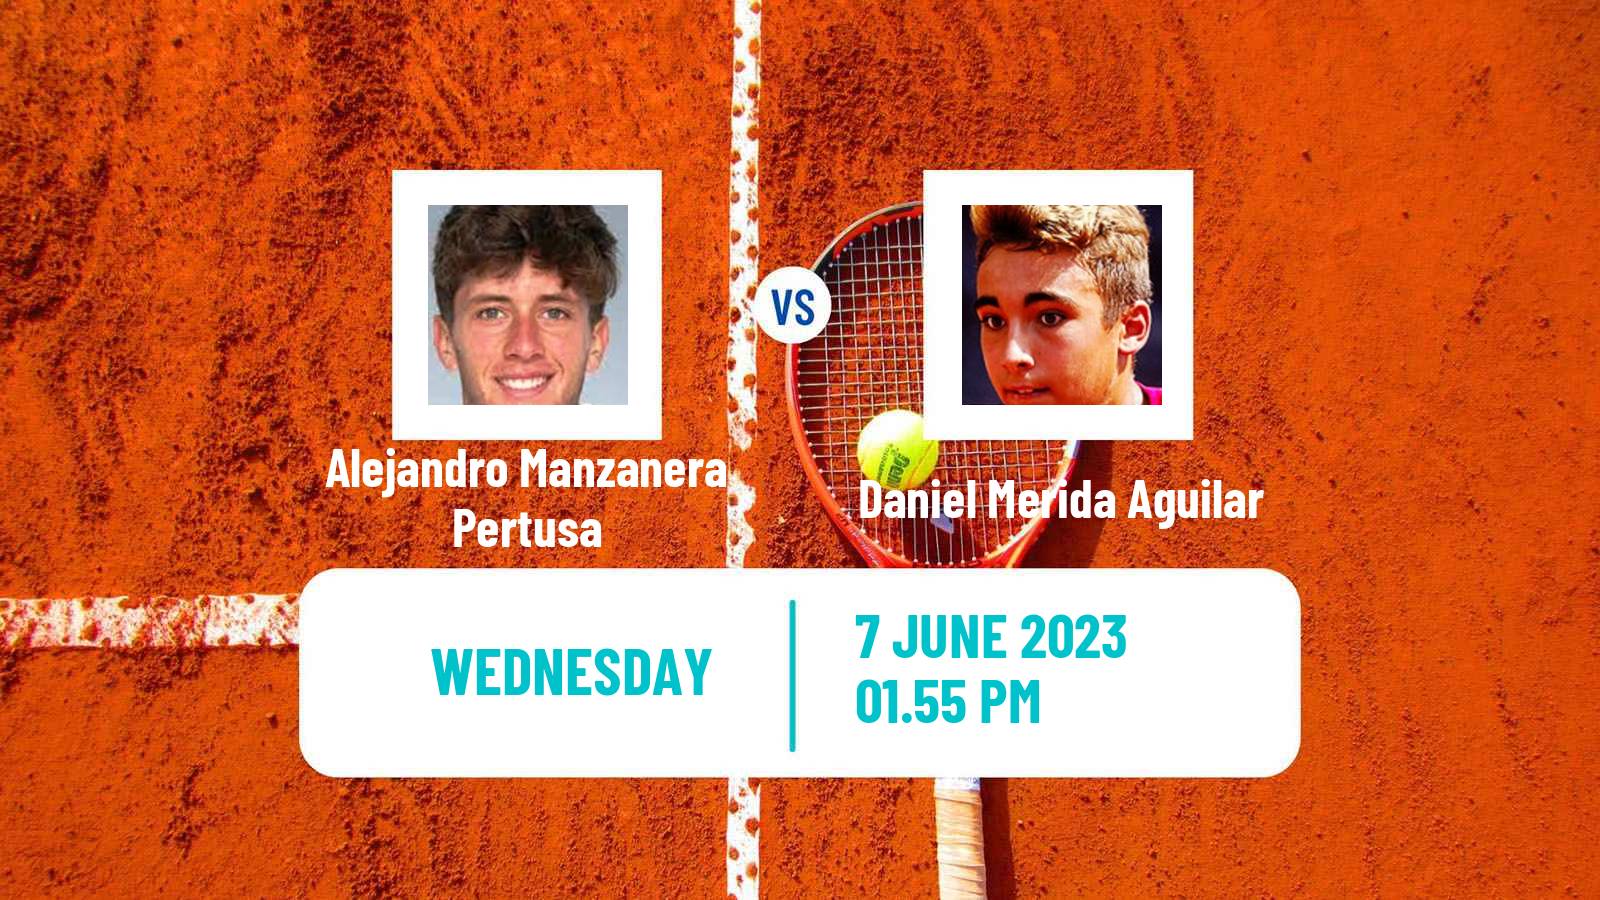 Tennis ITF M25 Cordoba Men Alejandro Manzanera Pertusa - Daniel Merida Aguilar